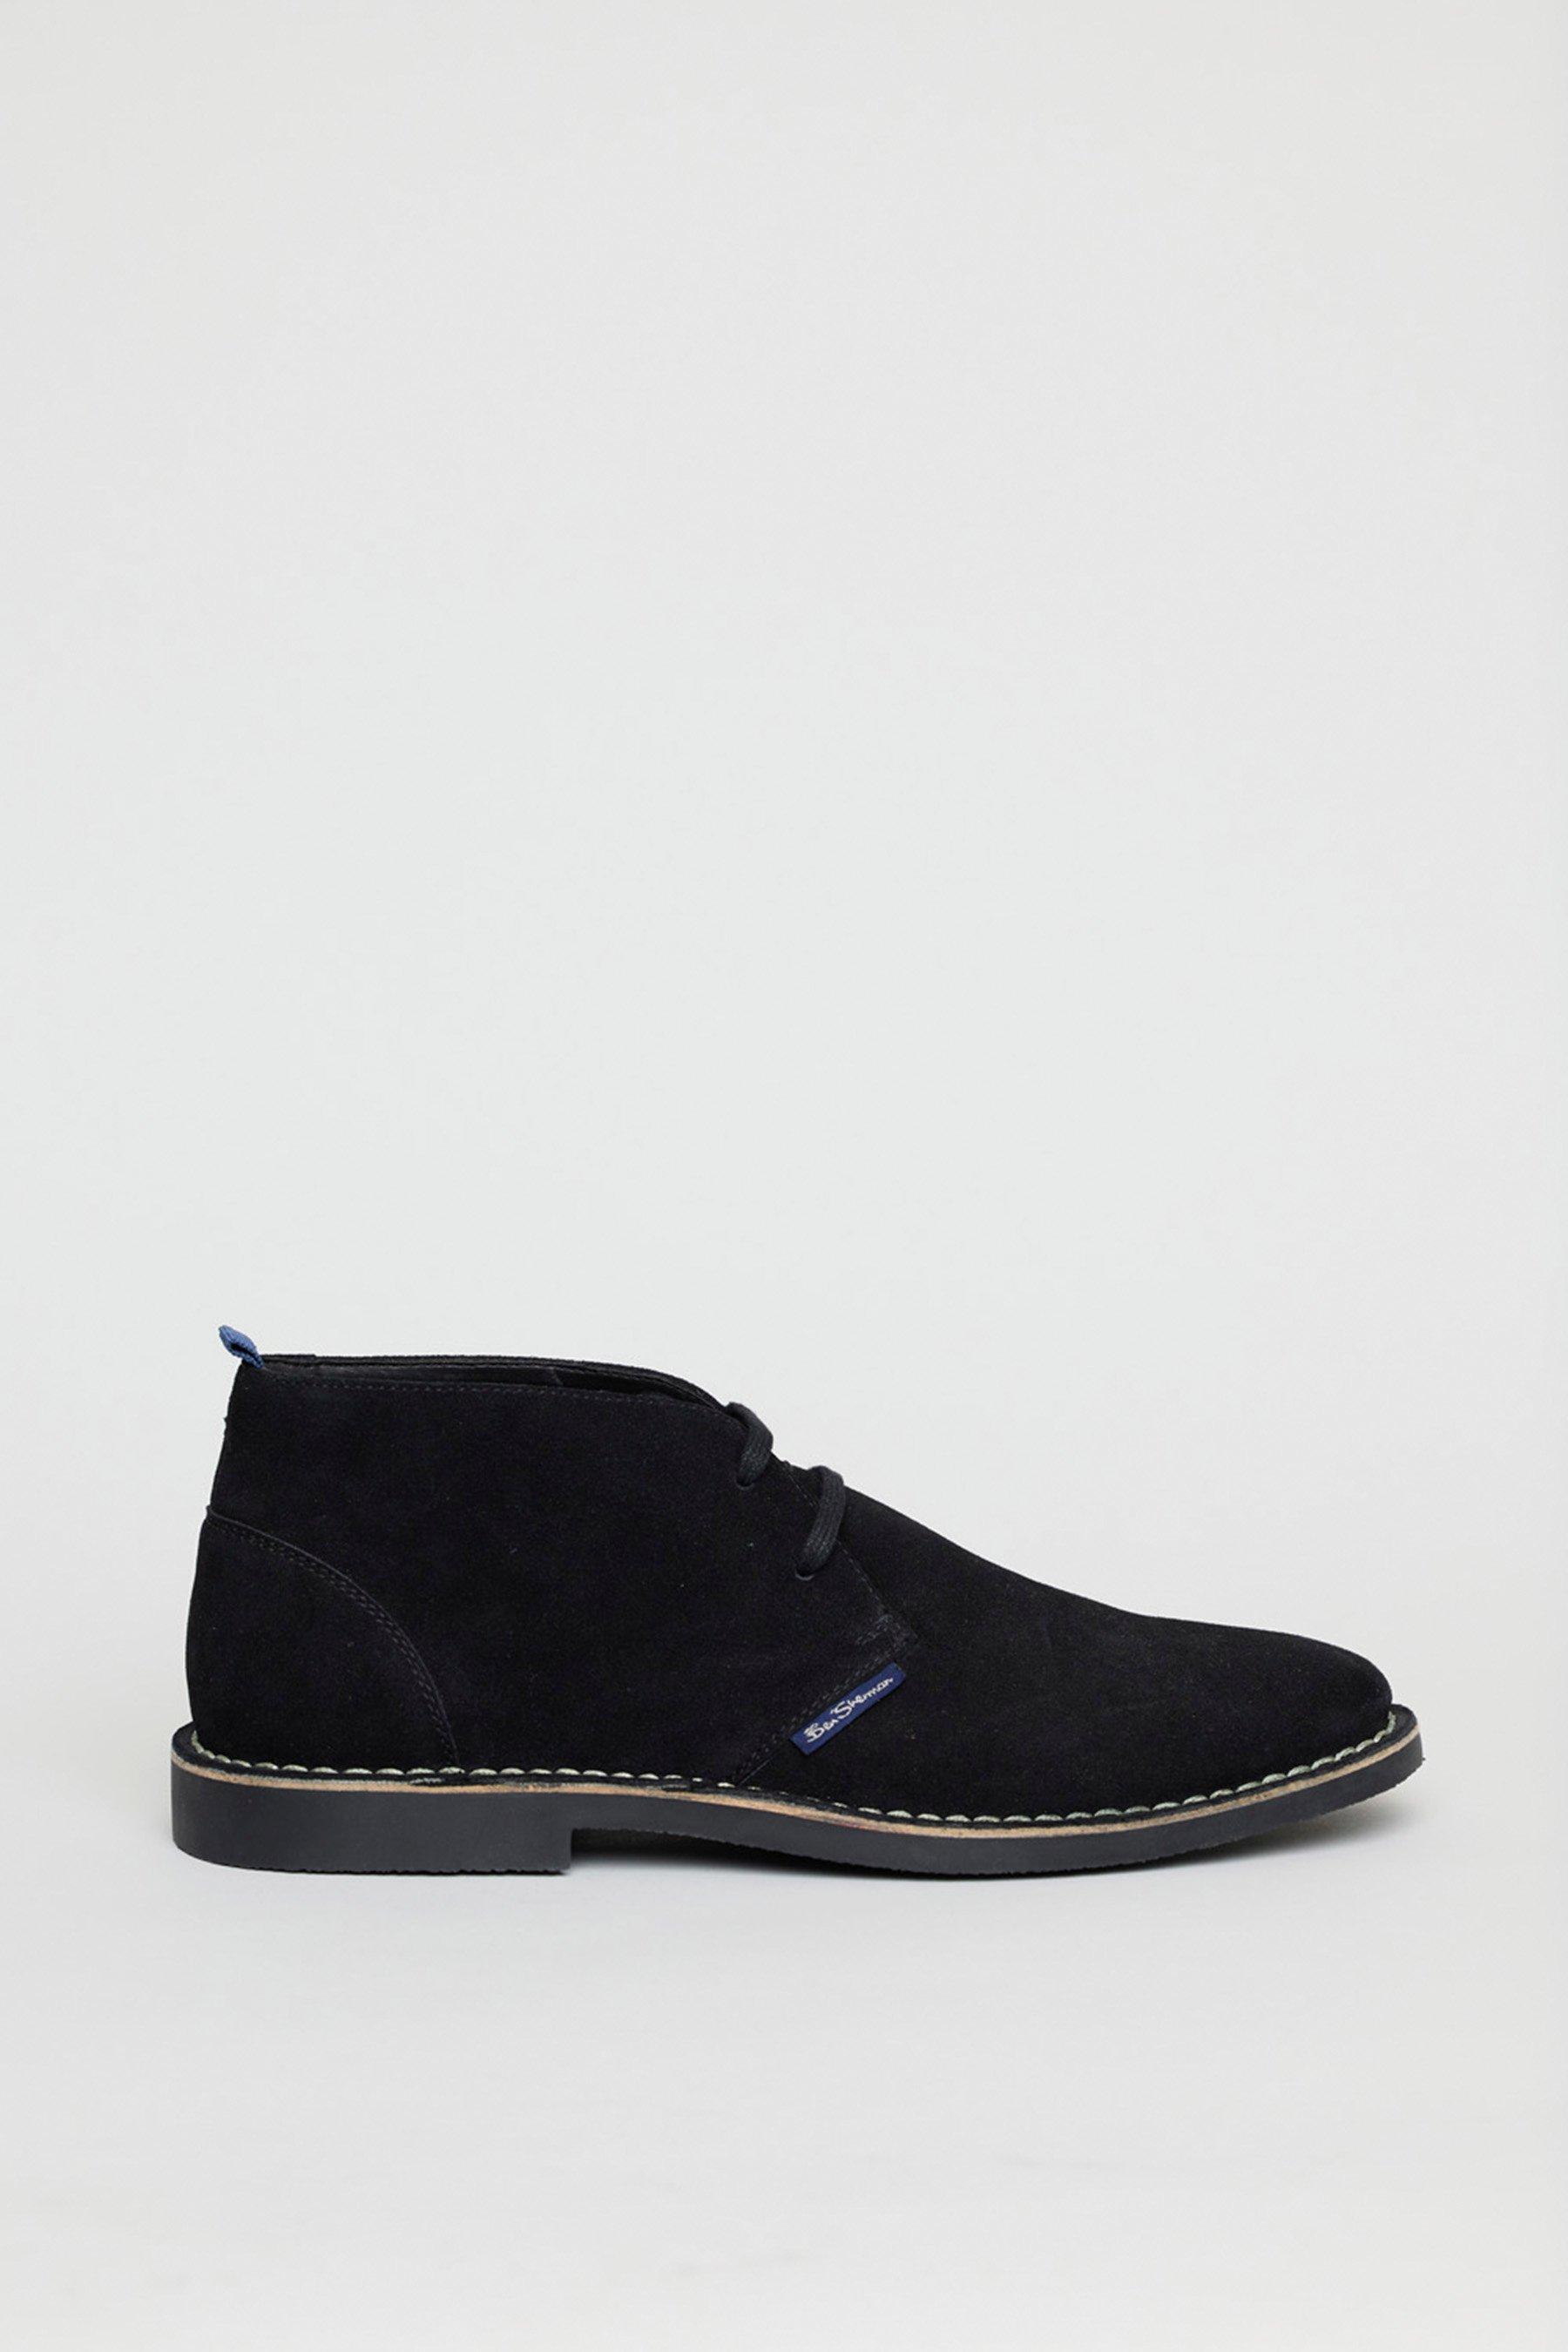 ben sherman hemmings black chukka boots - mens - size: 6